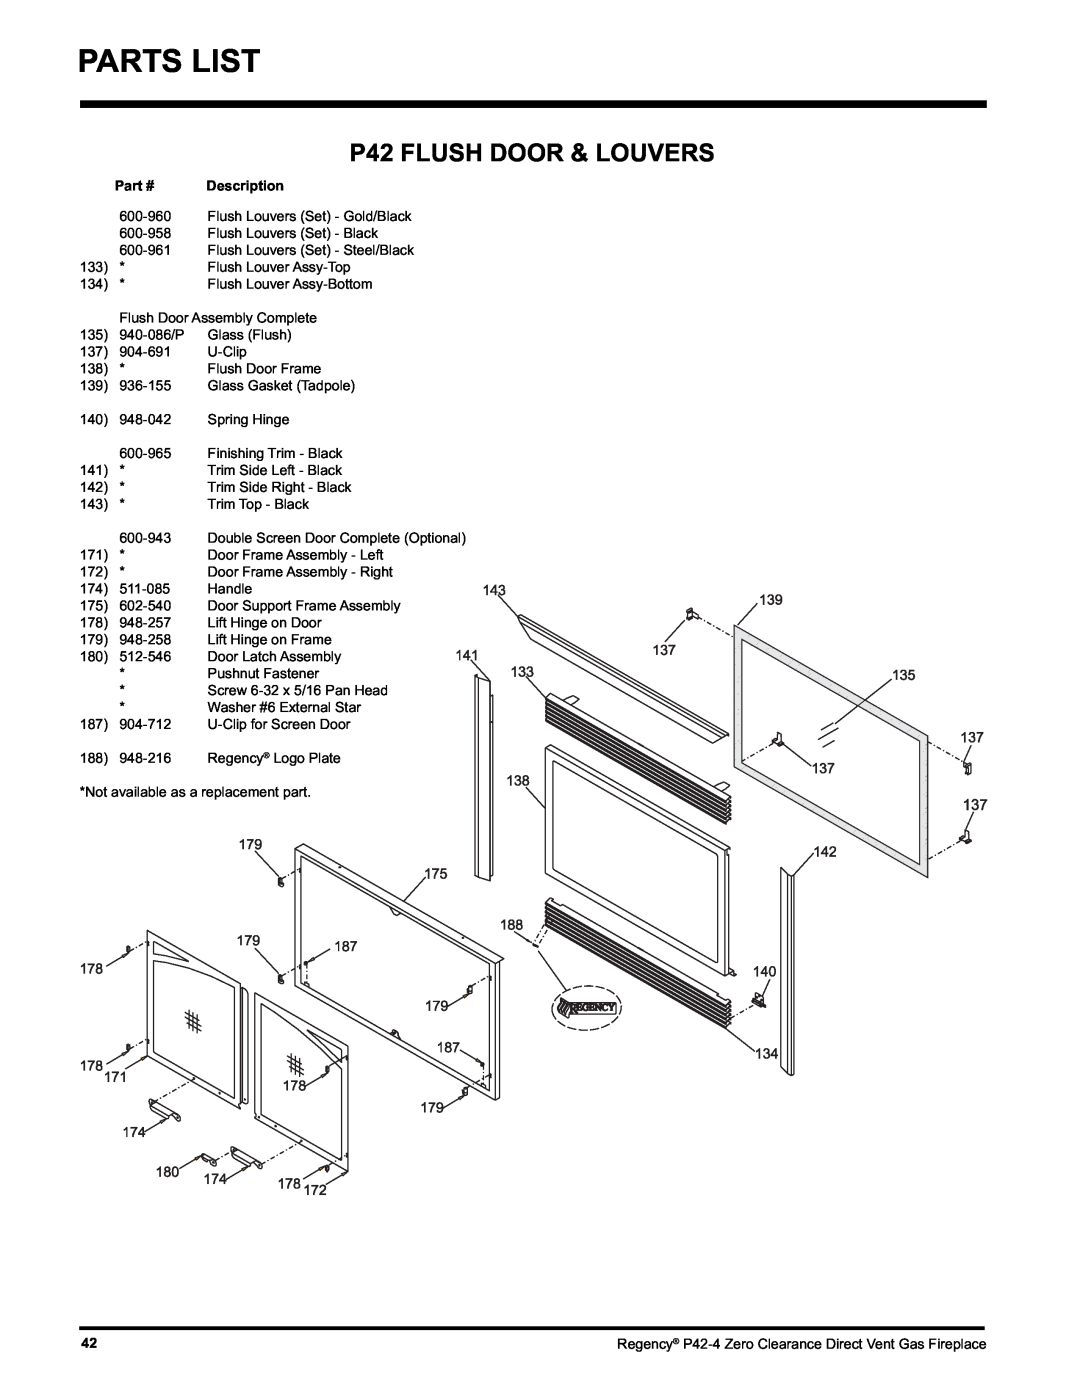 Regency P42-NG4, P42-LP4 installation manual P42 FLUSH DOOR & LOUVERS, Description 